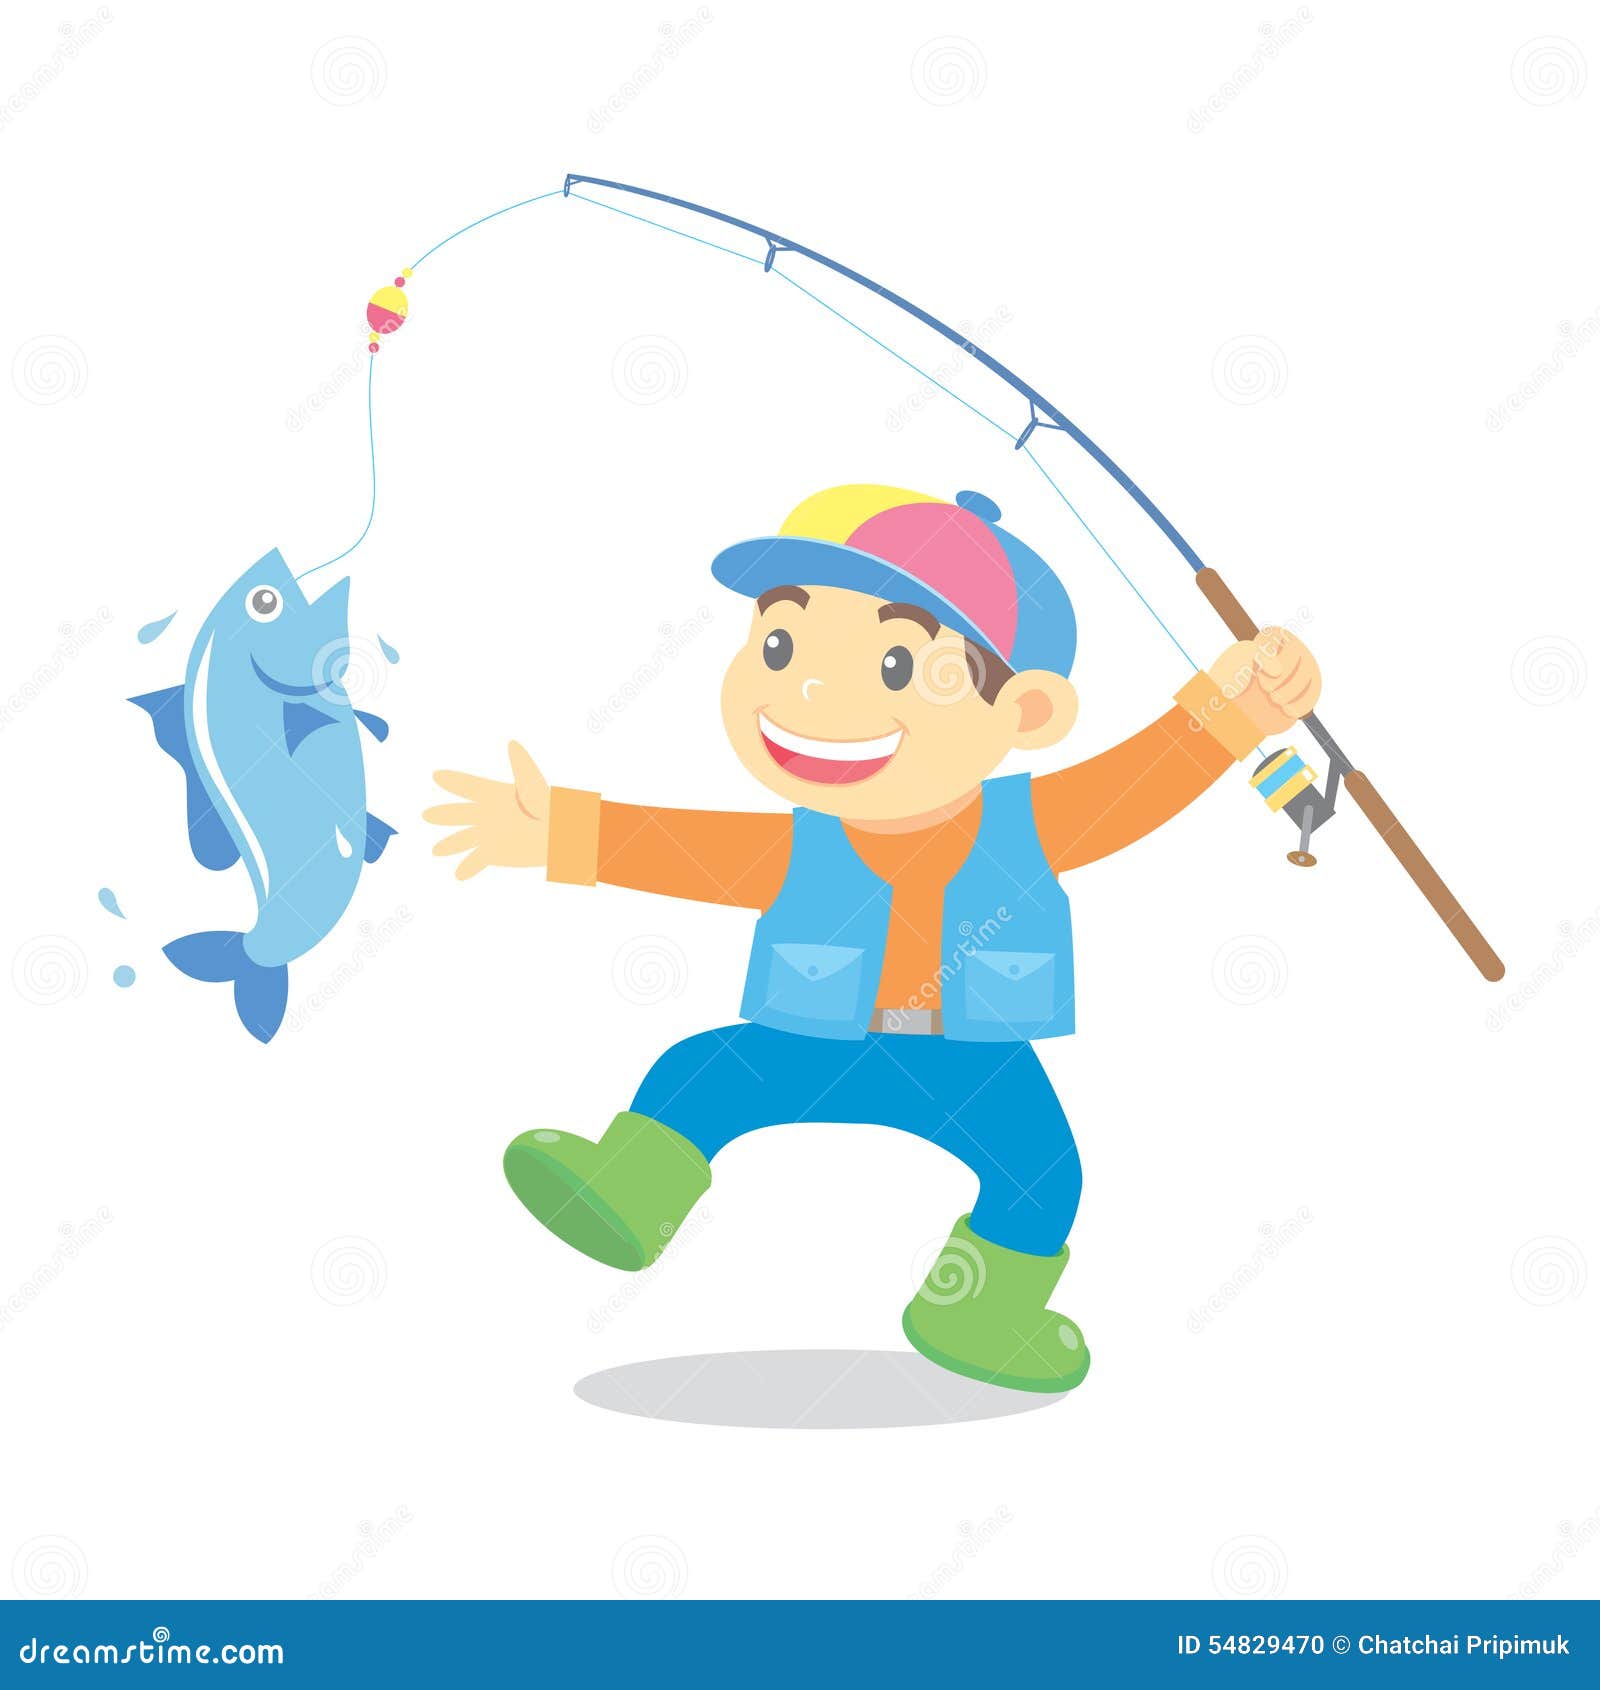 Fishing cartoon stock vector. Illustration of vector - 54829470